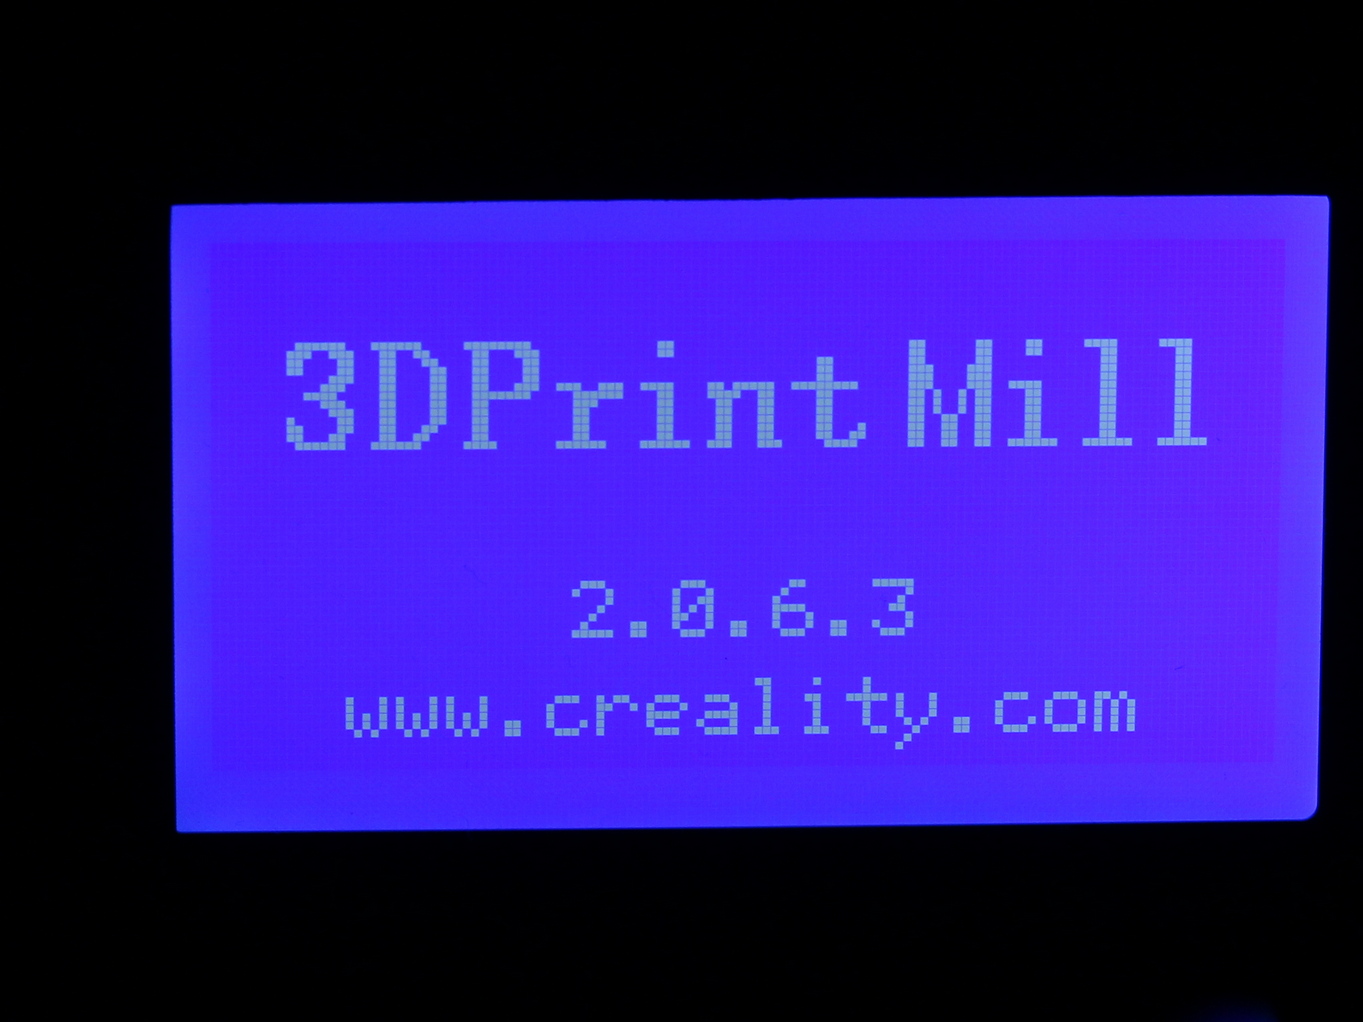 Creality 3DPrintMill Screen CR 30 2 | Creality 3DPrintMill (CR-30) Review: Belt Printer for Batch 3D Printing